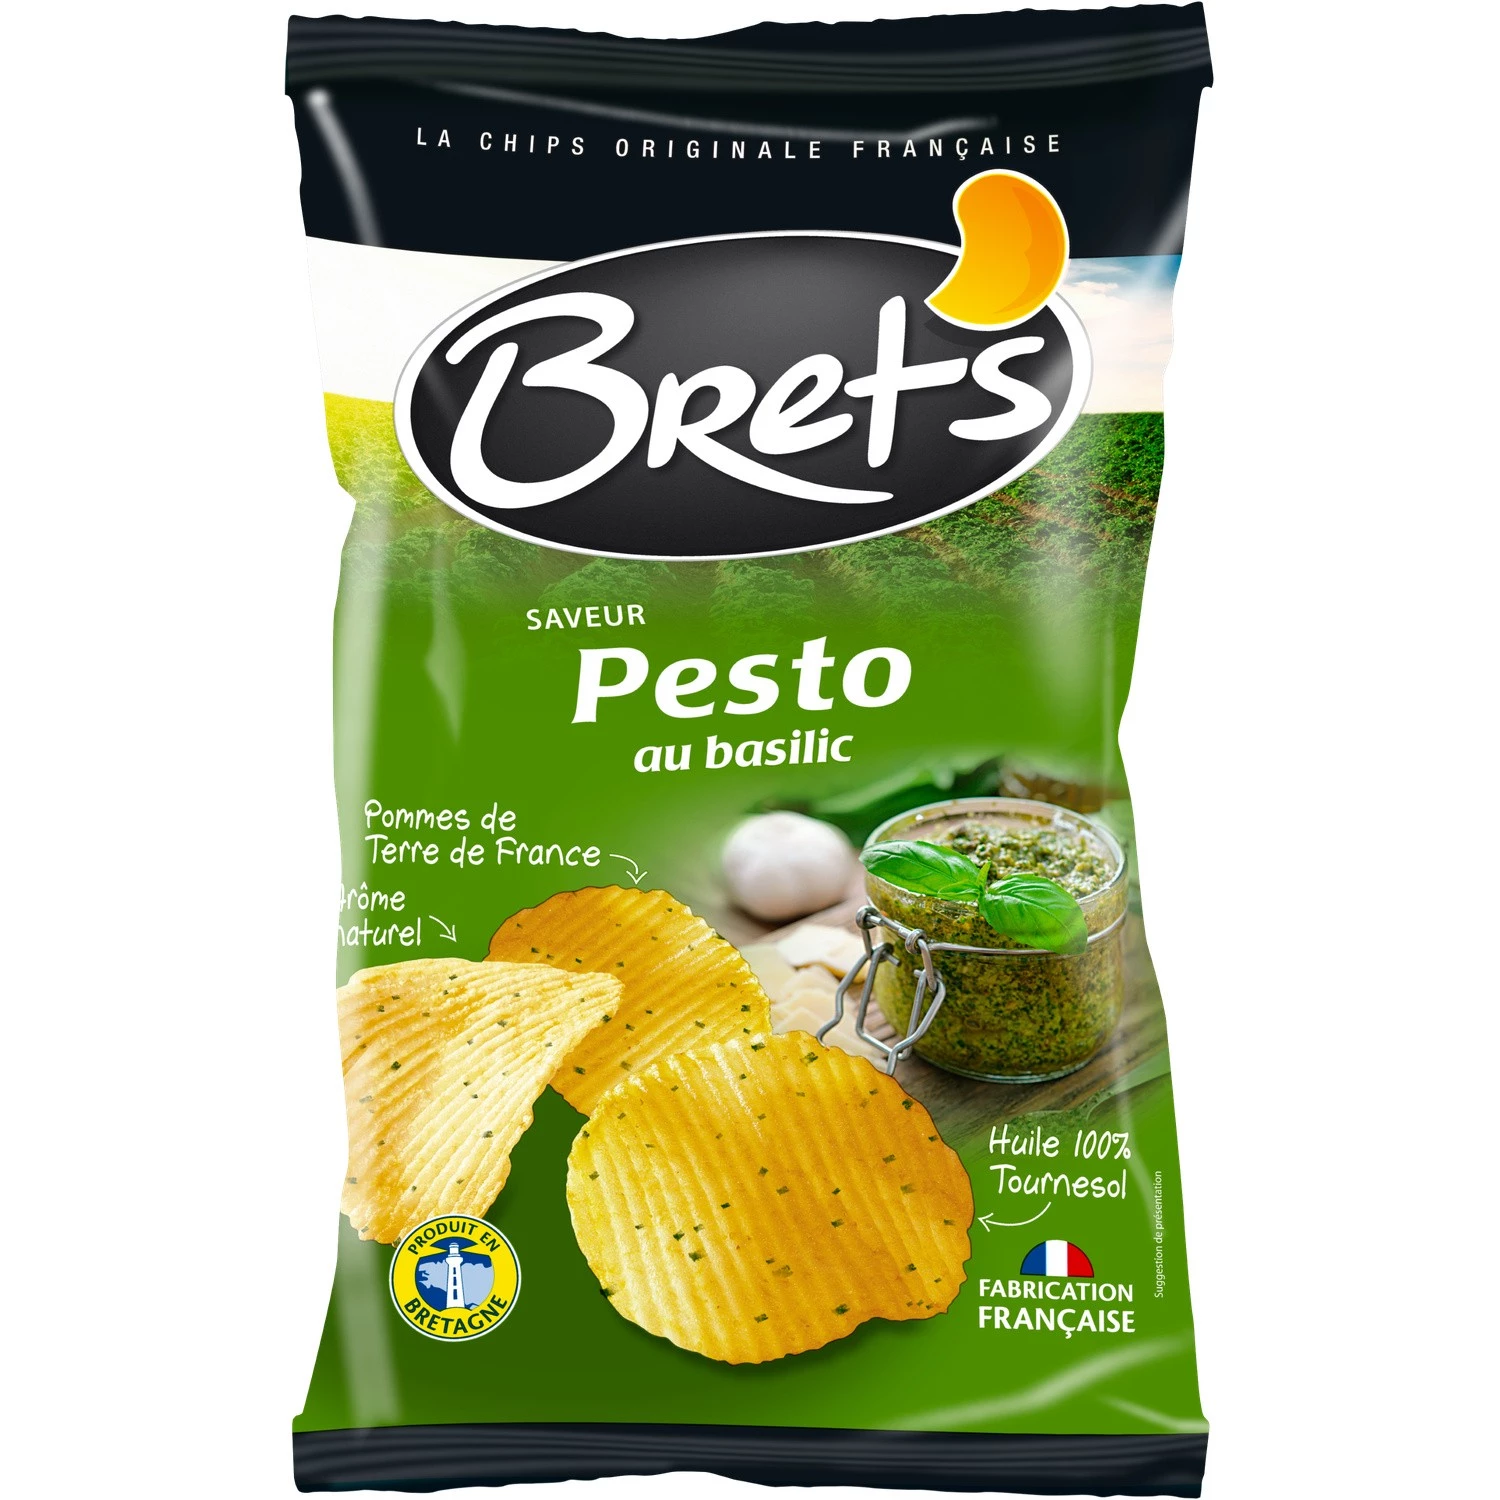 Chips saveur pesto au basilic 125g - BRET'S